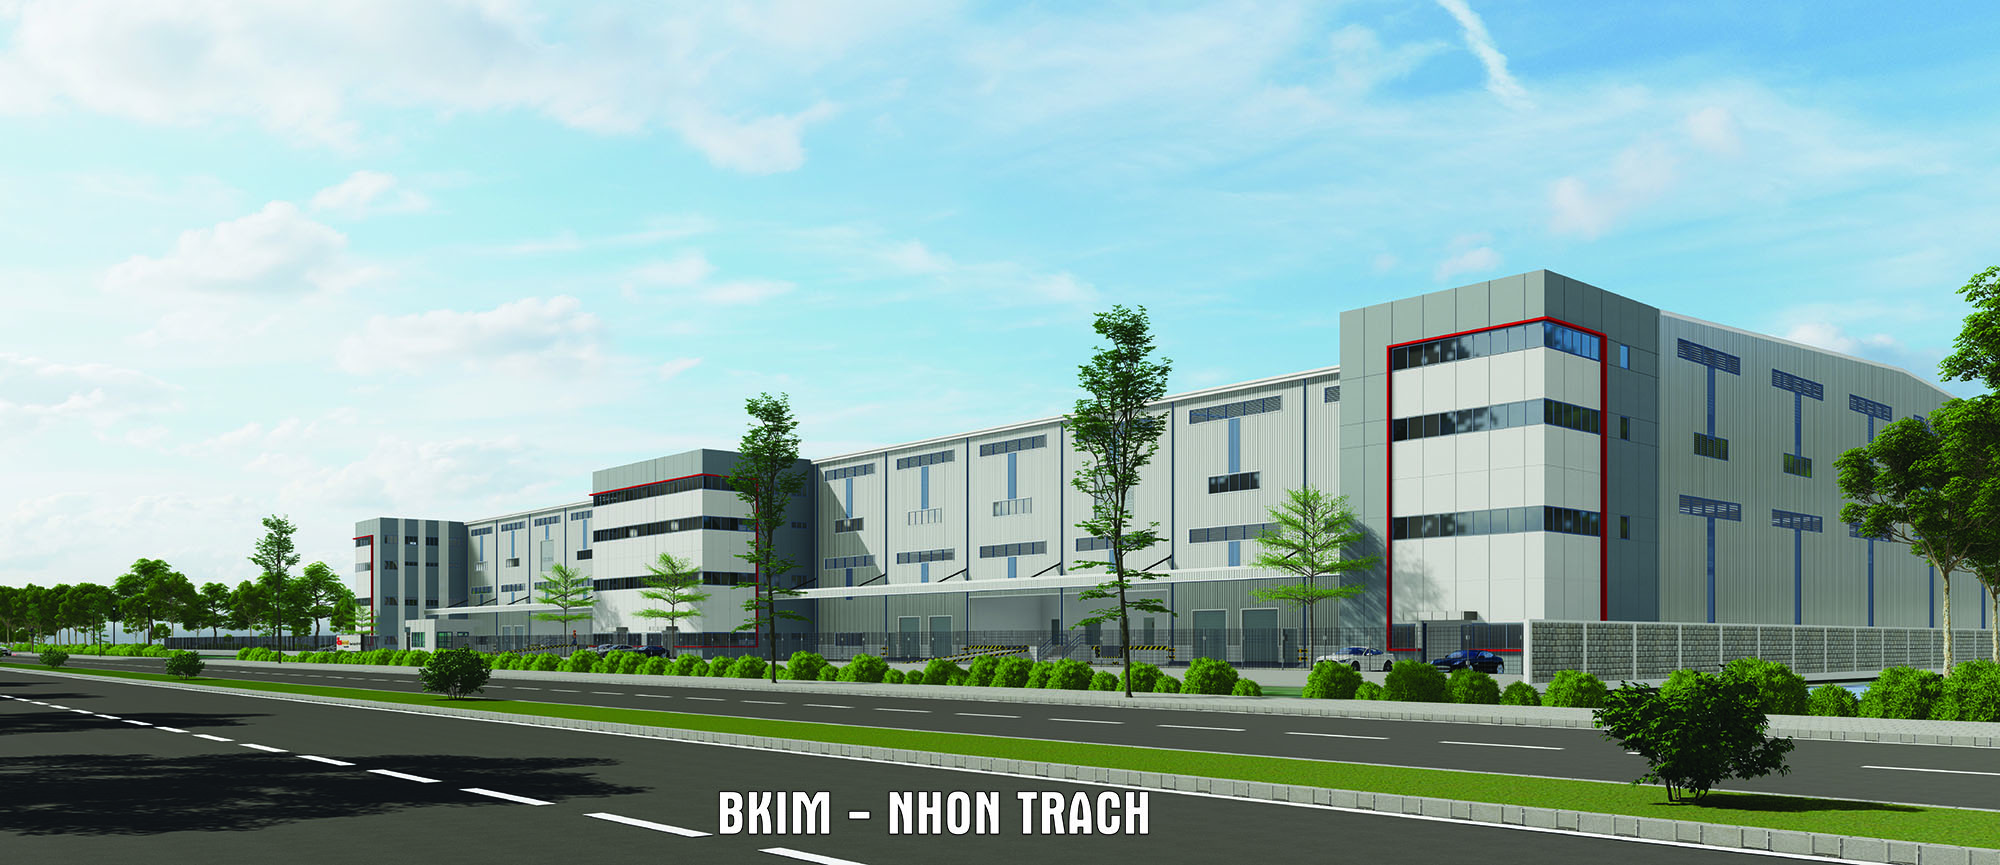 BKIM - NHON TRACH